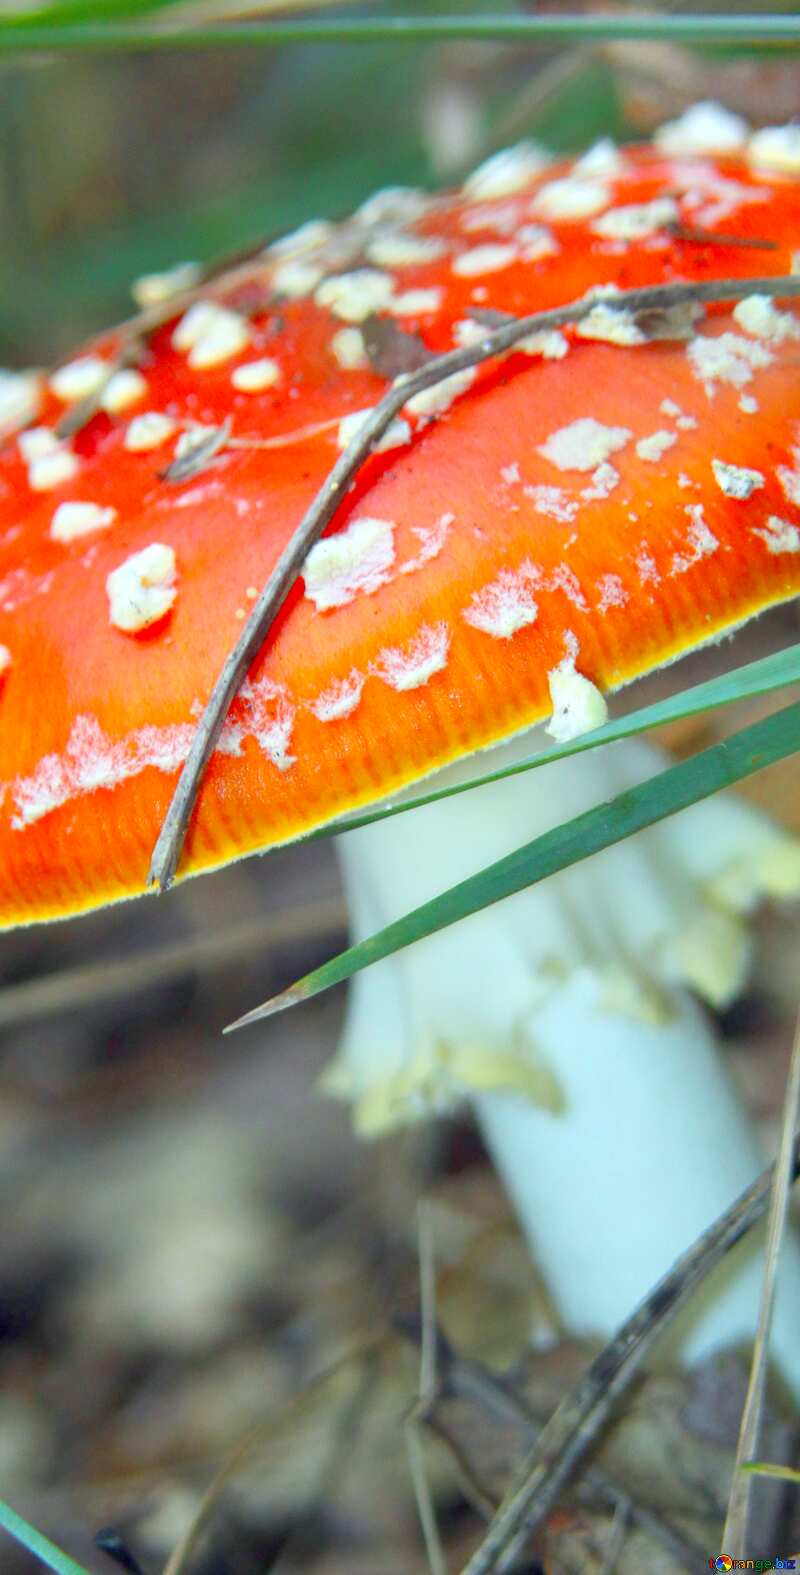 Image for profile picture Hallucinogenic mushroom. №5583